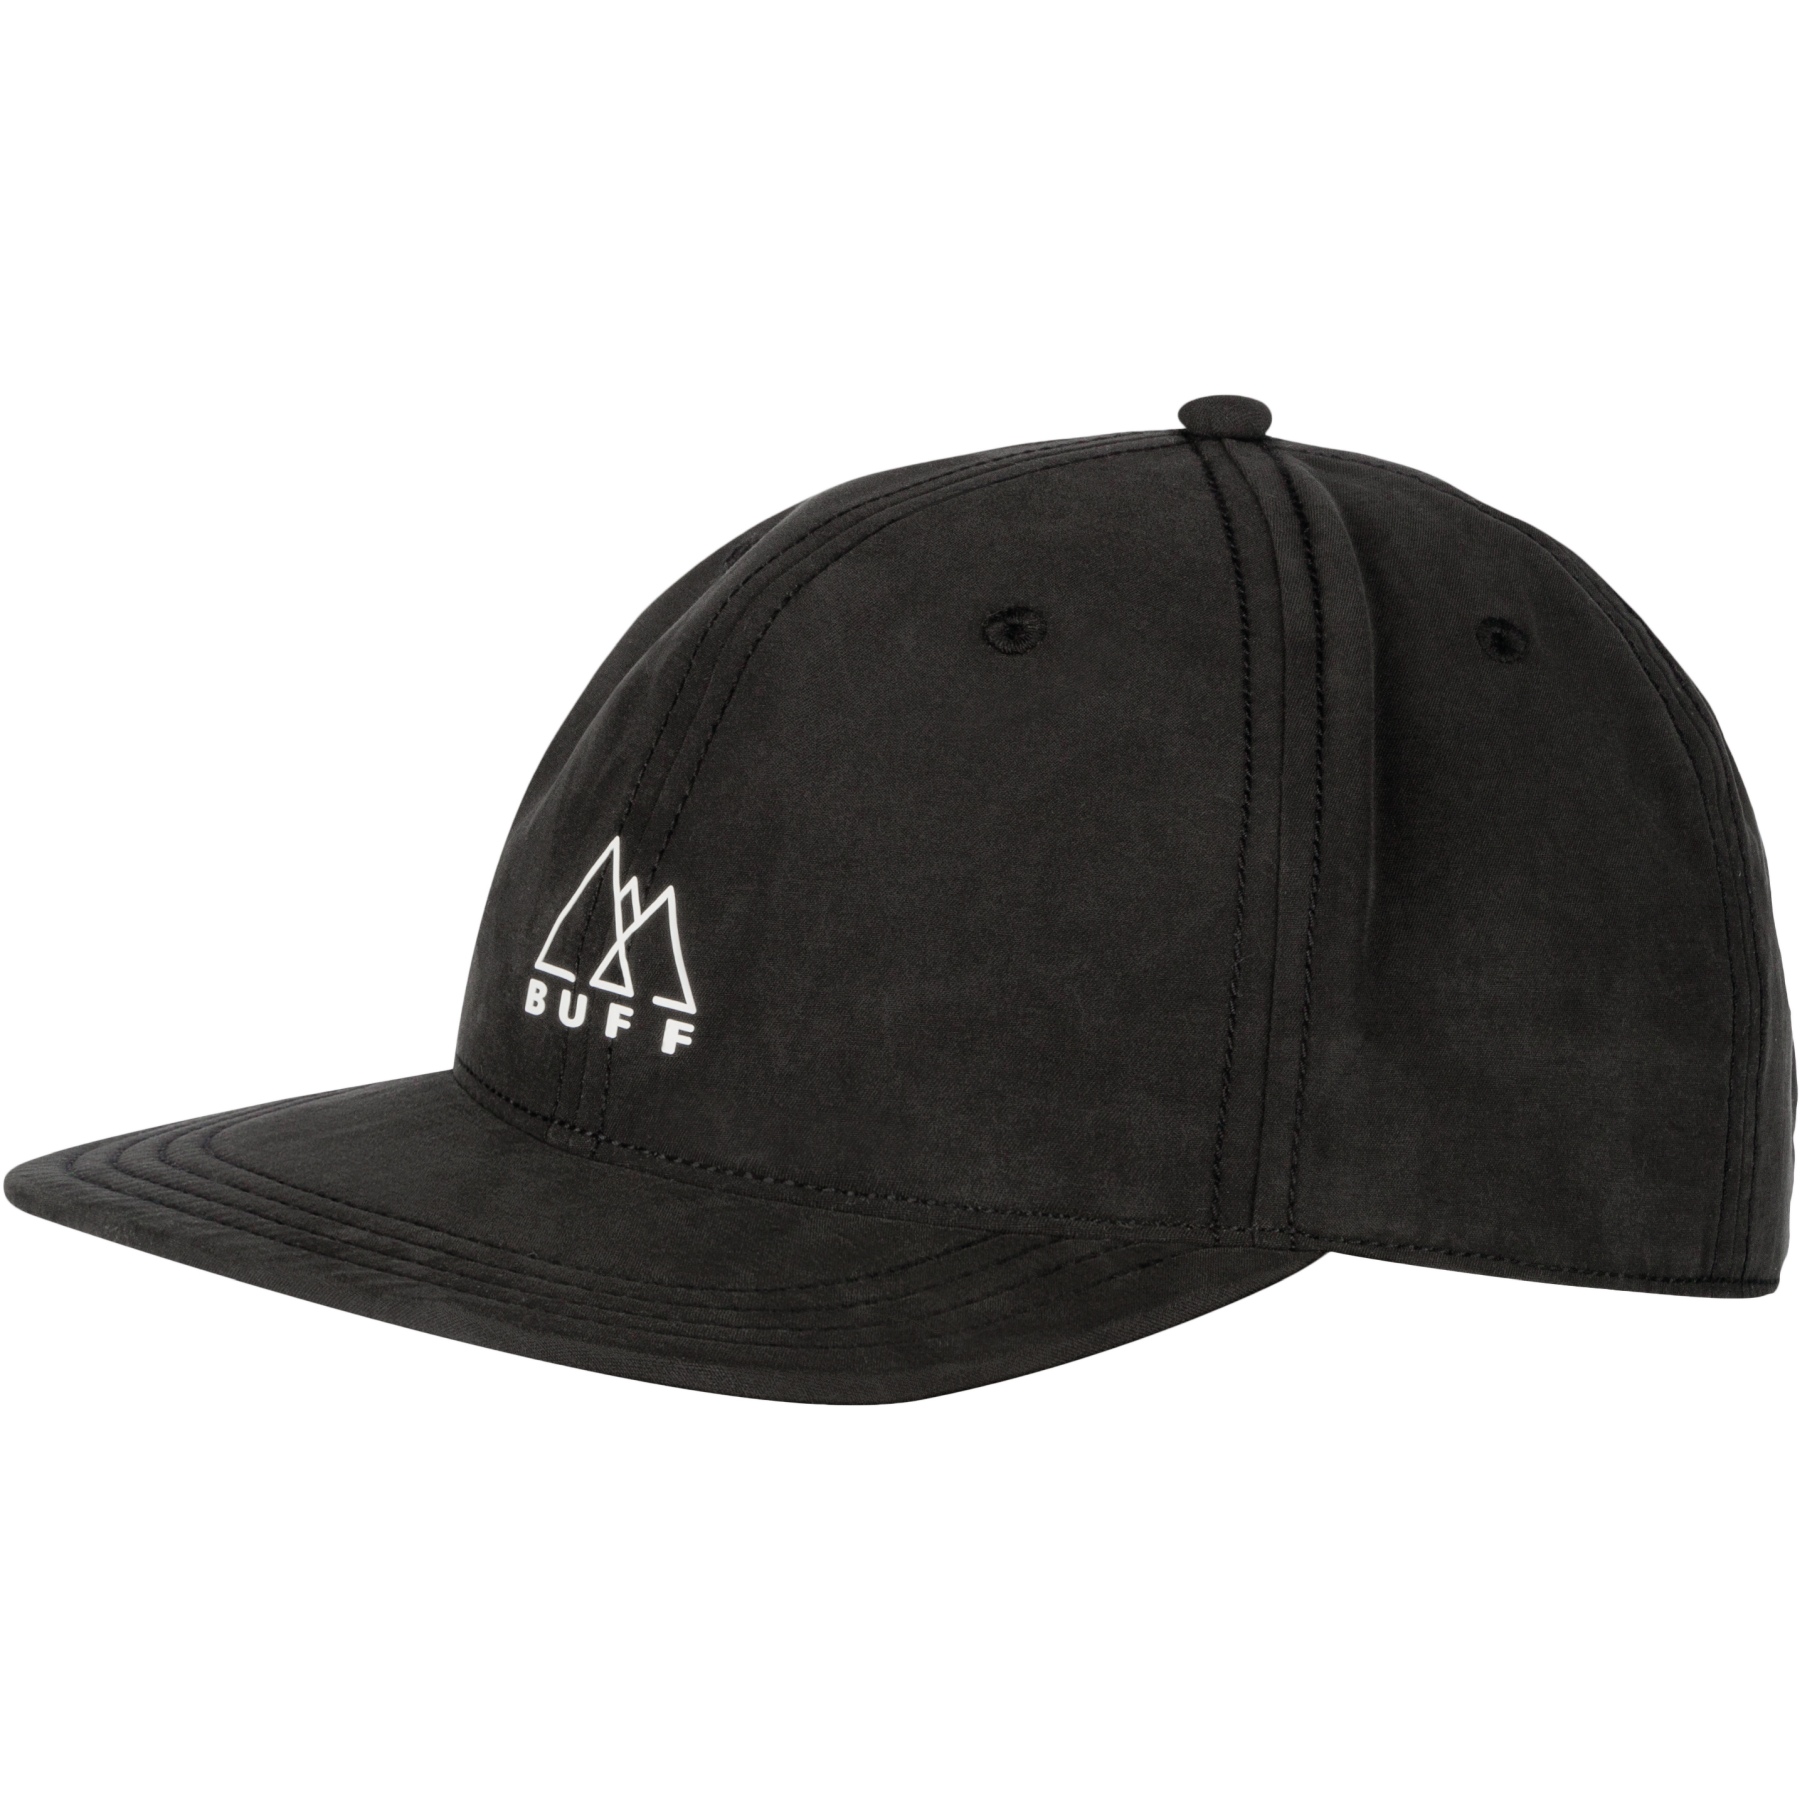 Produktbild von Buff® Pack Baseball Cap - Solid Black